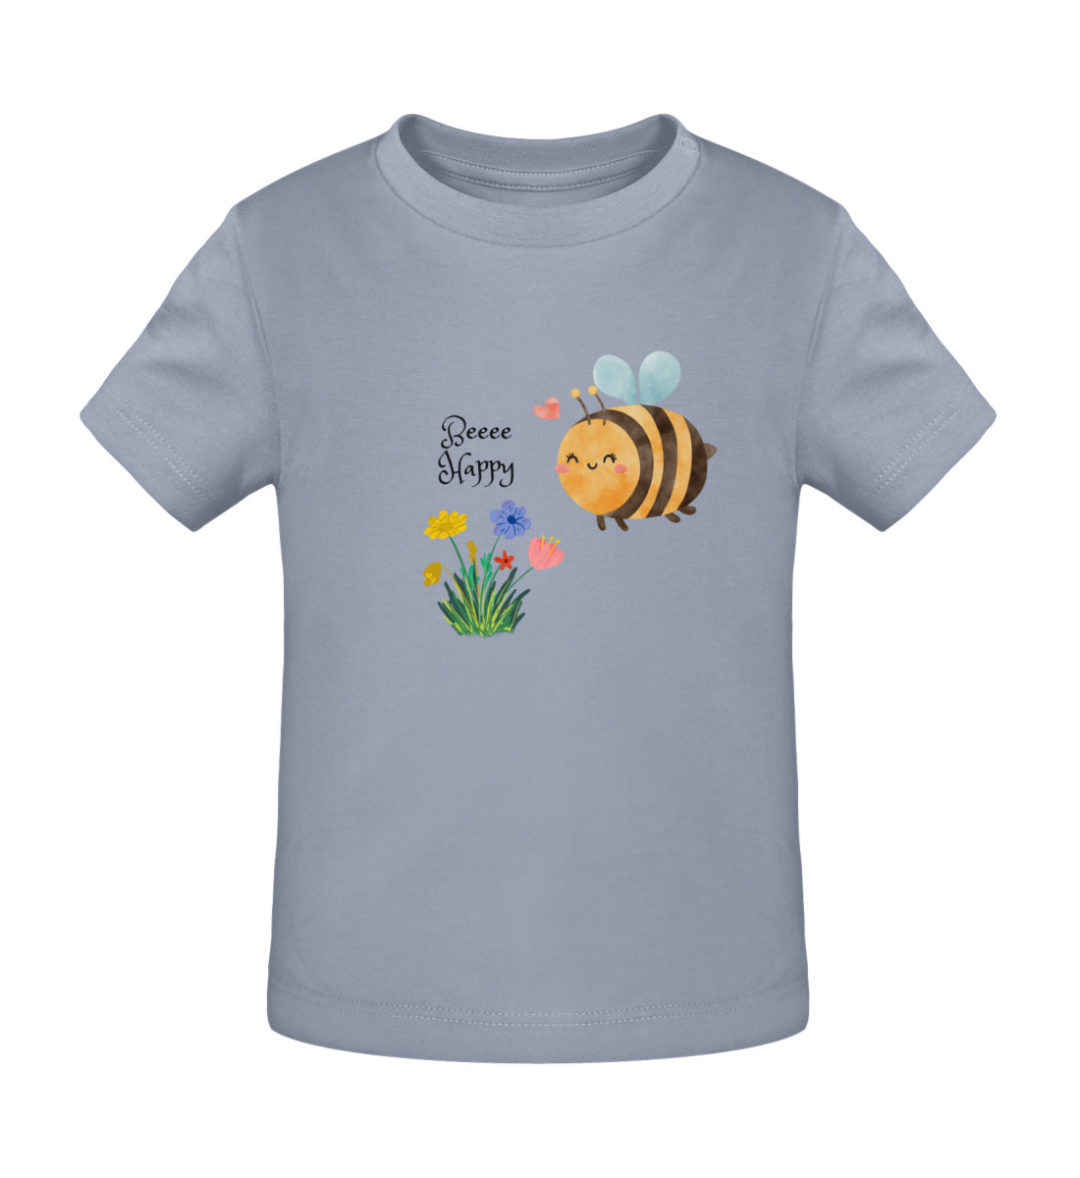 Beee happy - Baby Creator T-Shirt ST/ST-7086